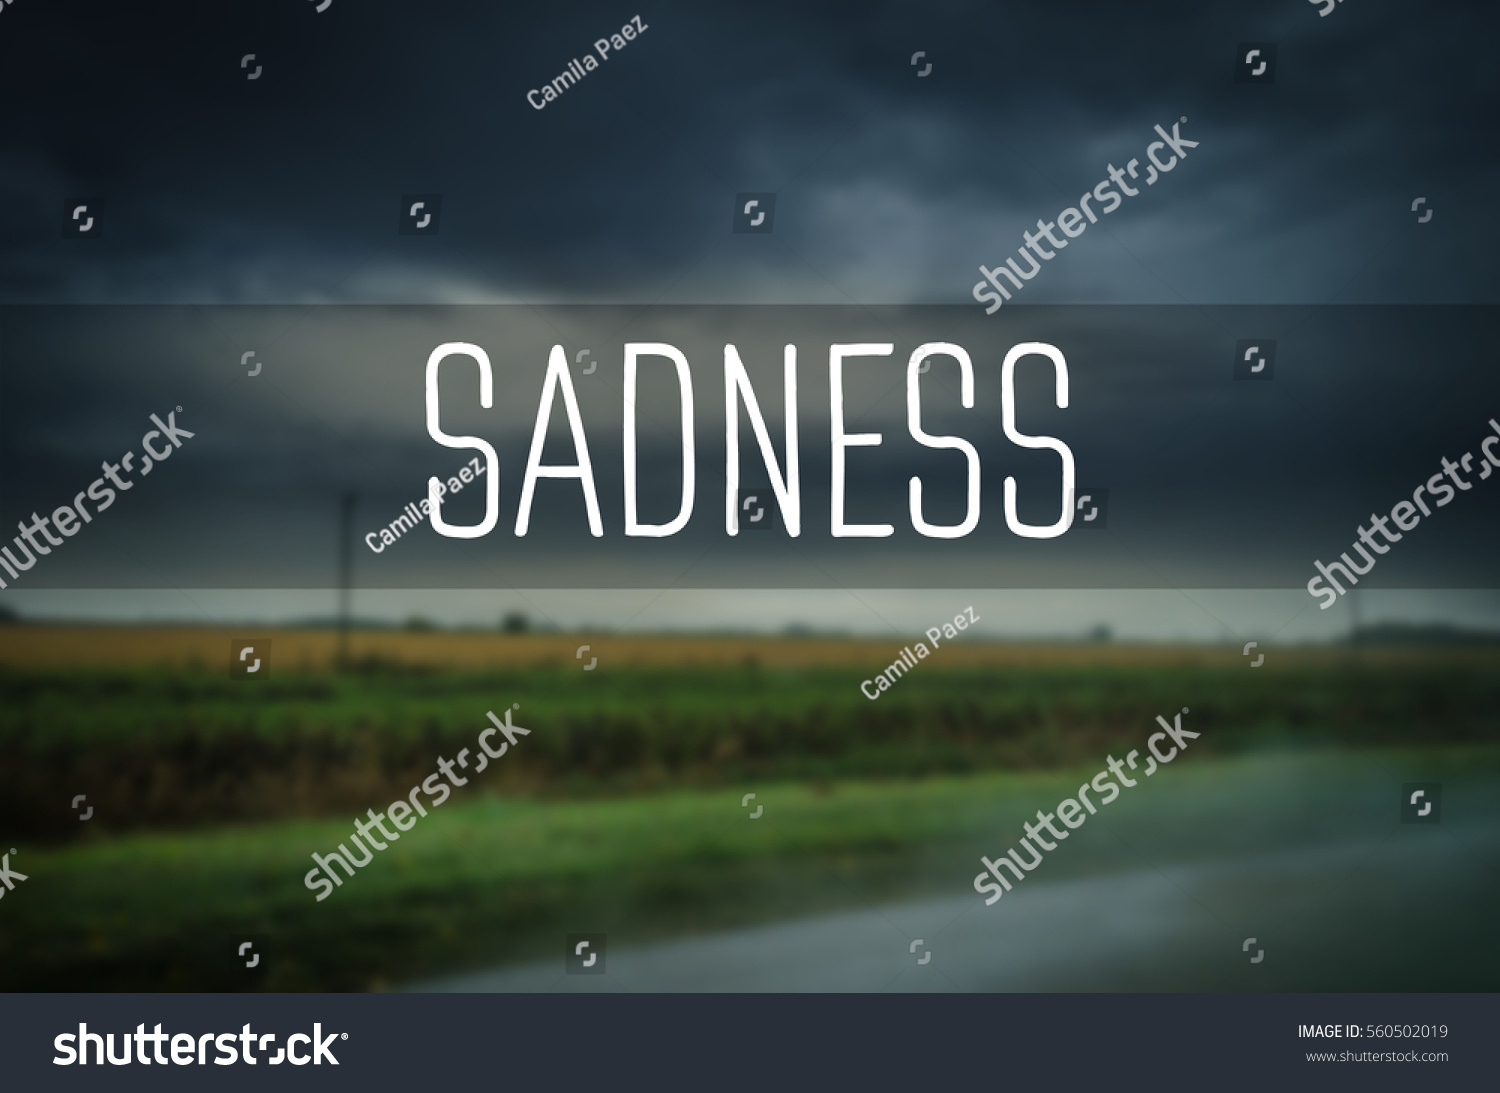 Sadness Day 